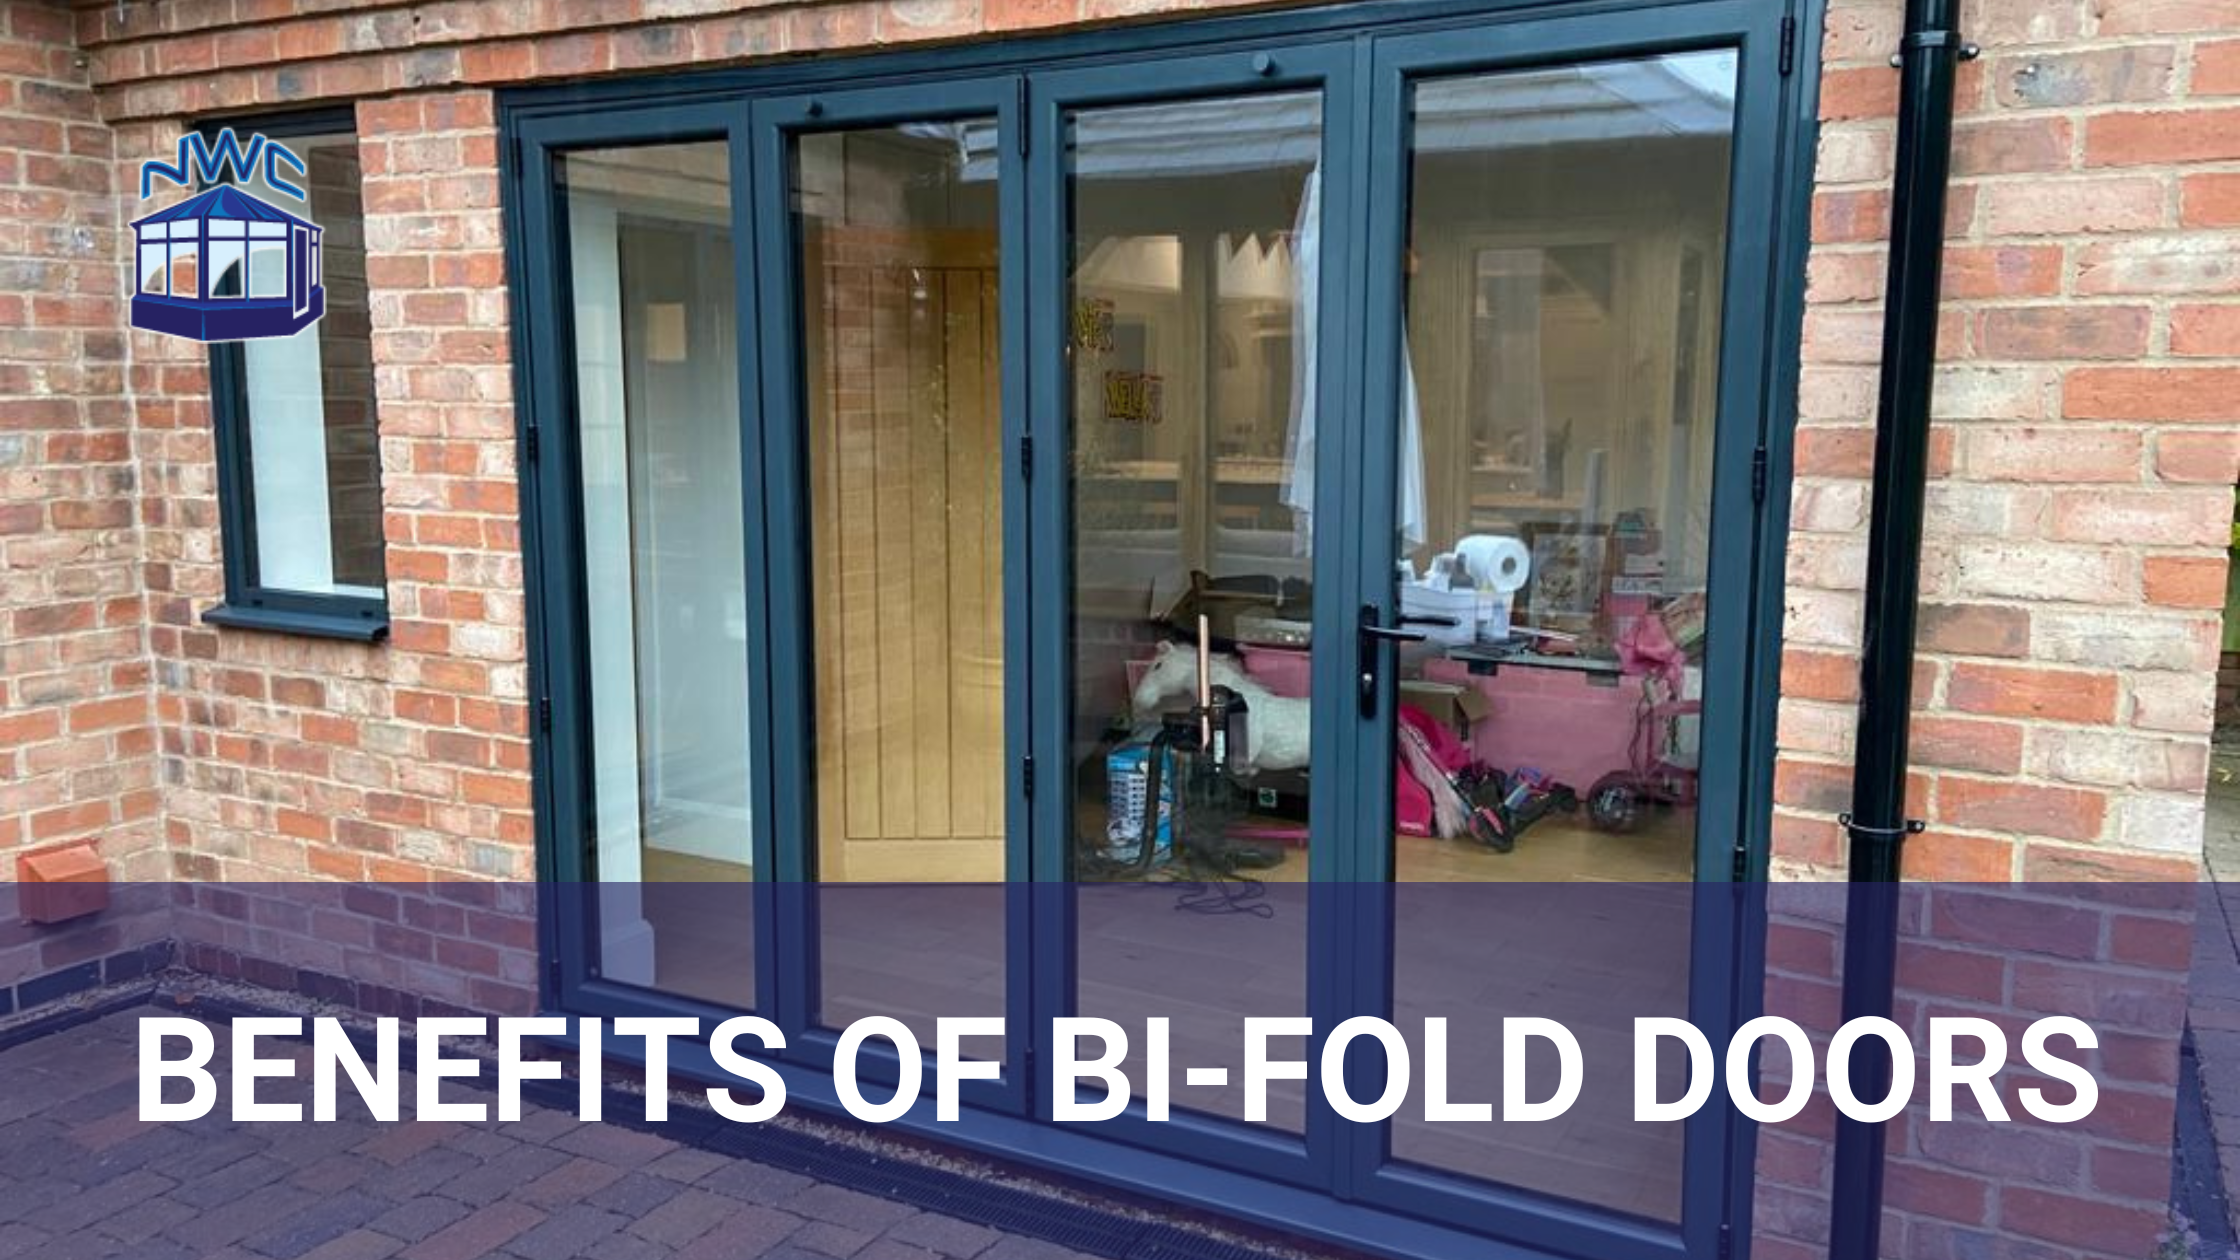 Benefits of bi-fold doors - Blog